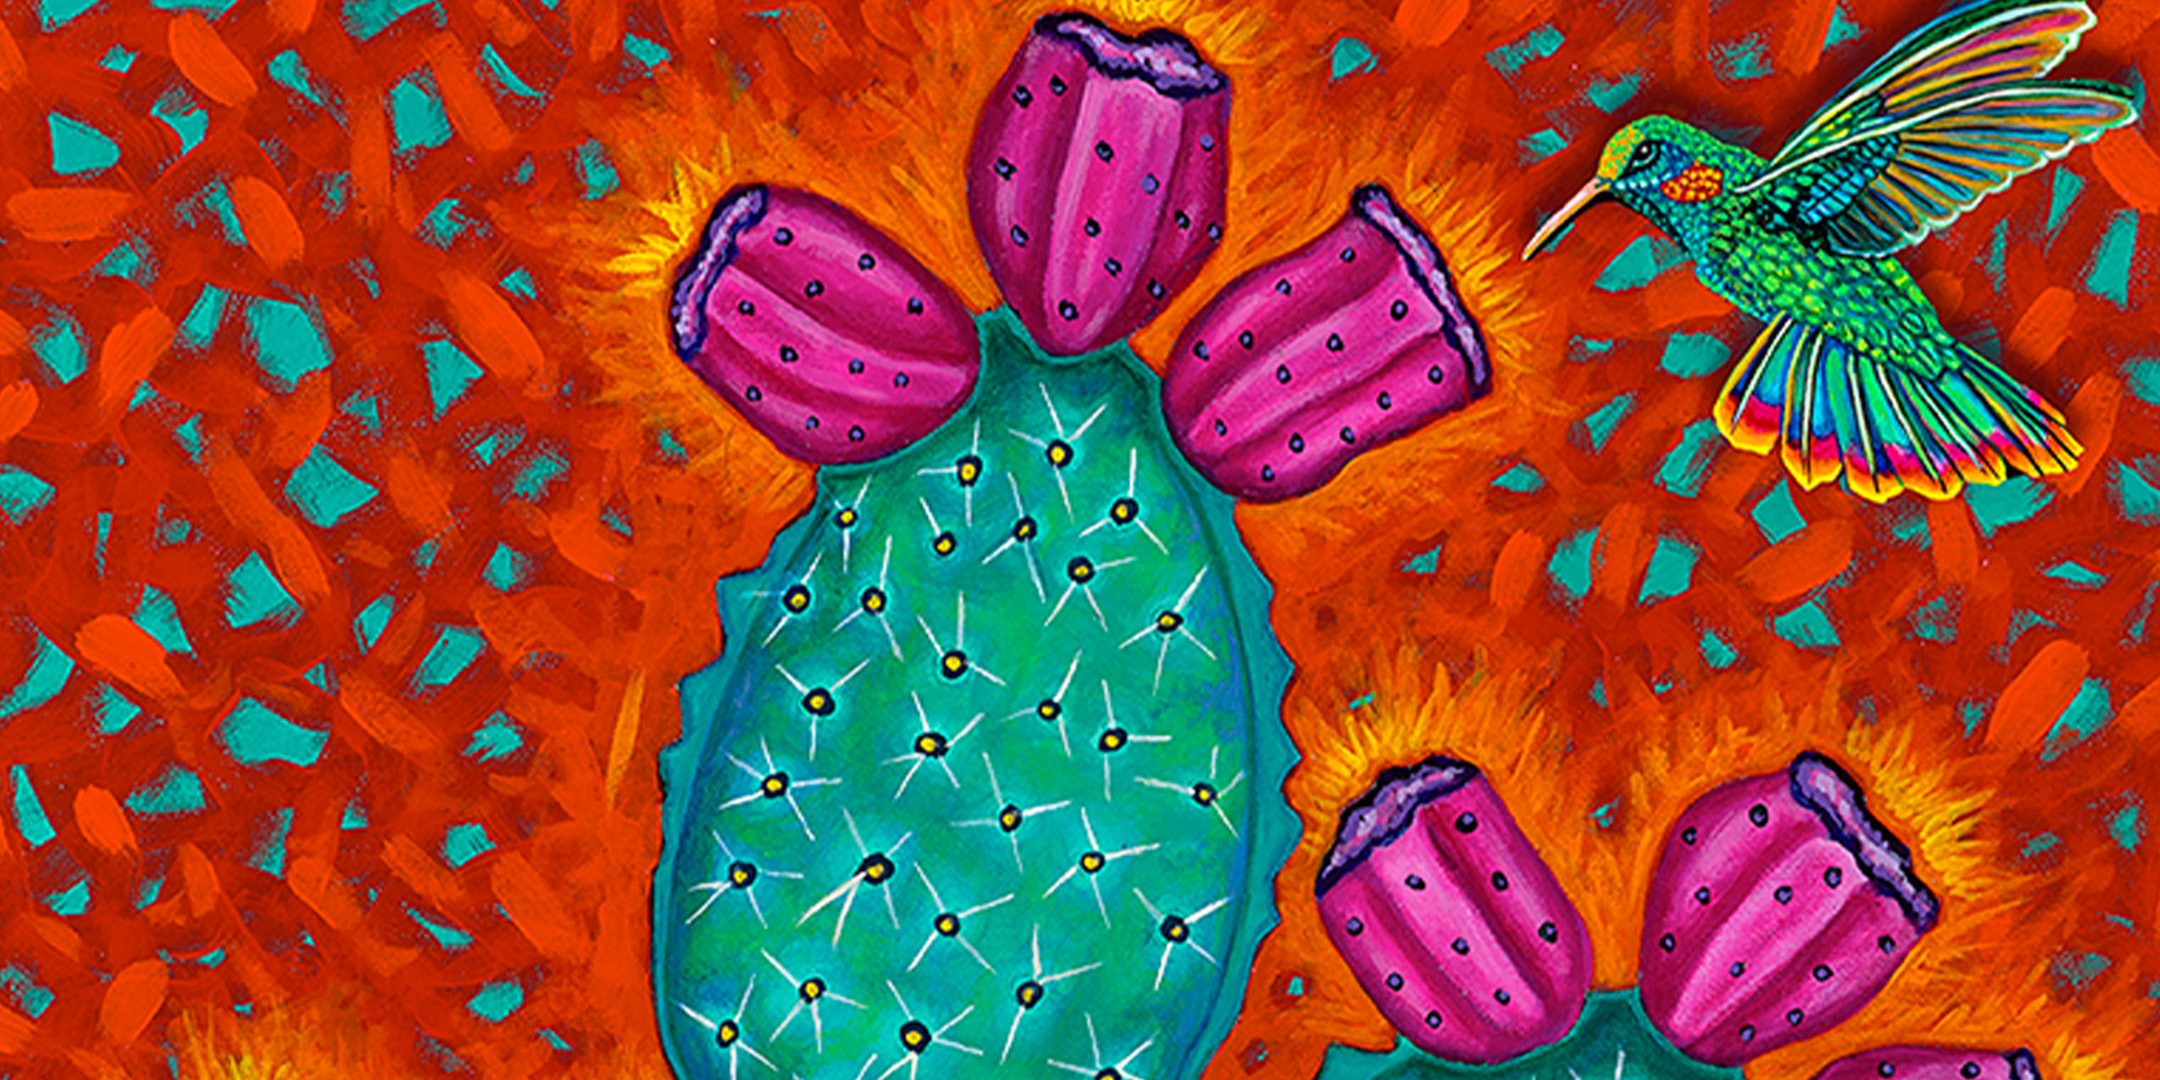 Cactus by Pola Lopez